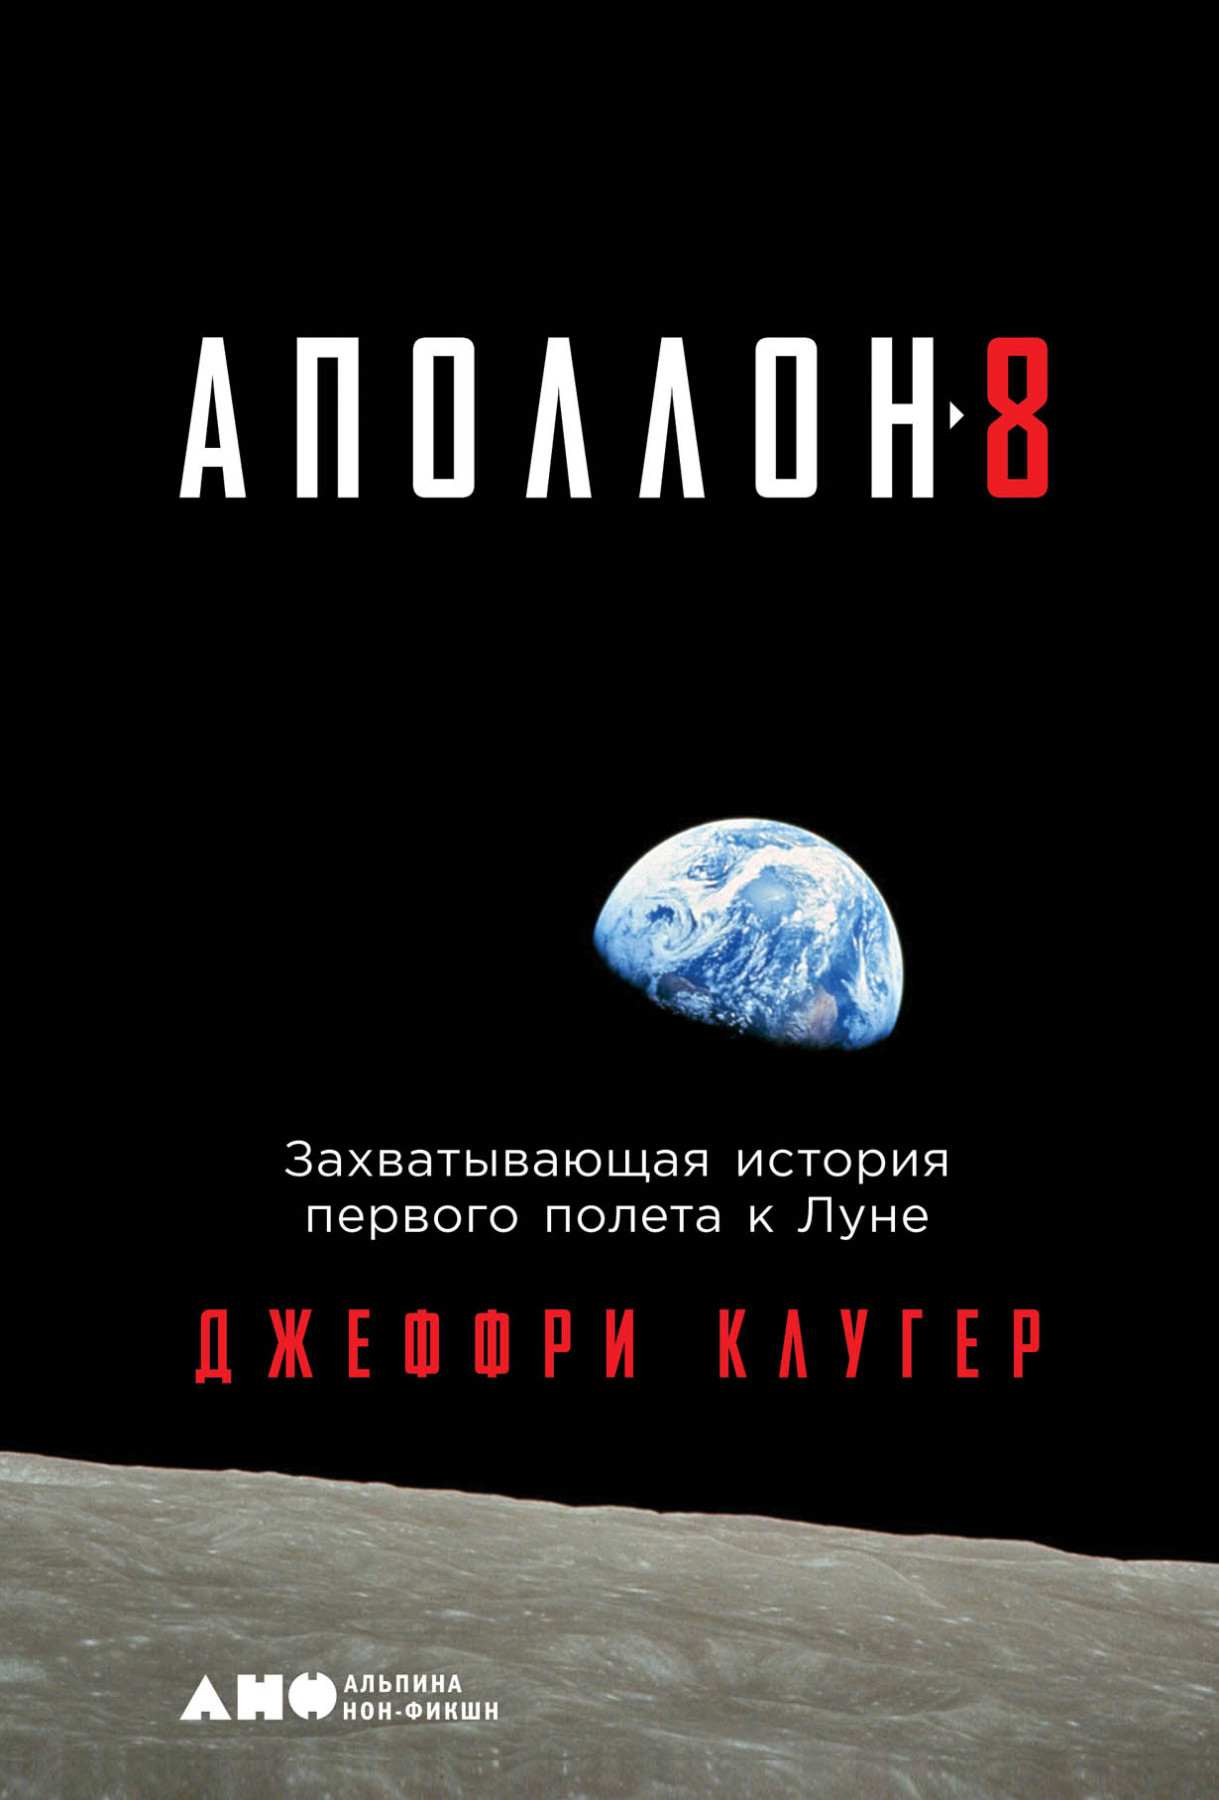 «Аполлон-8» обложка.